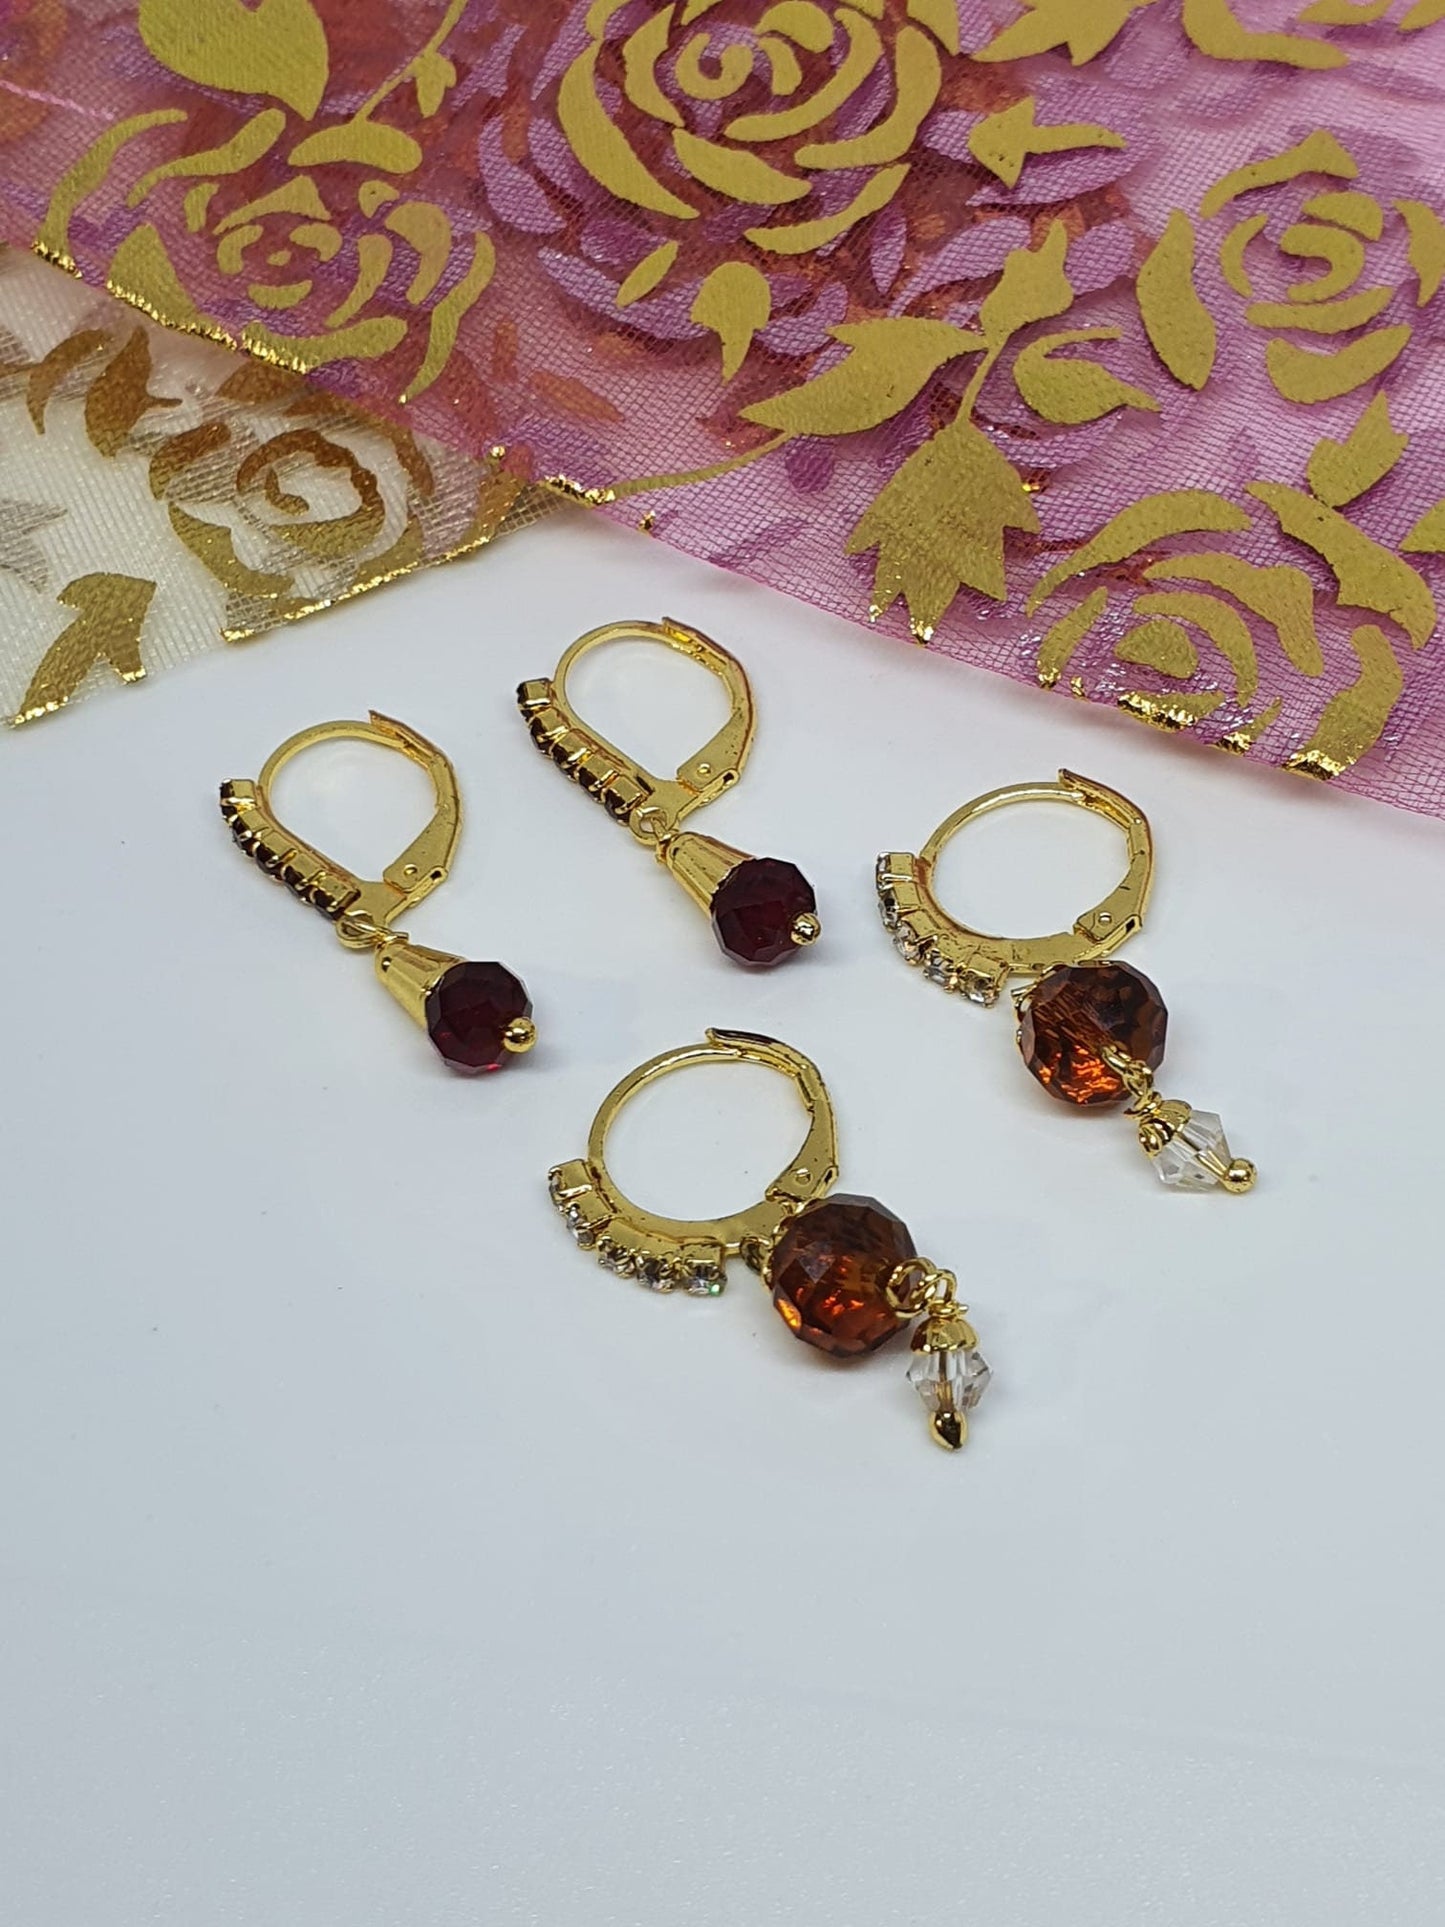 2 Pairs Red Hoop Stone Earrings Gold Tone Bollywood Wedding Indian Jewelry Women Pierced Ears